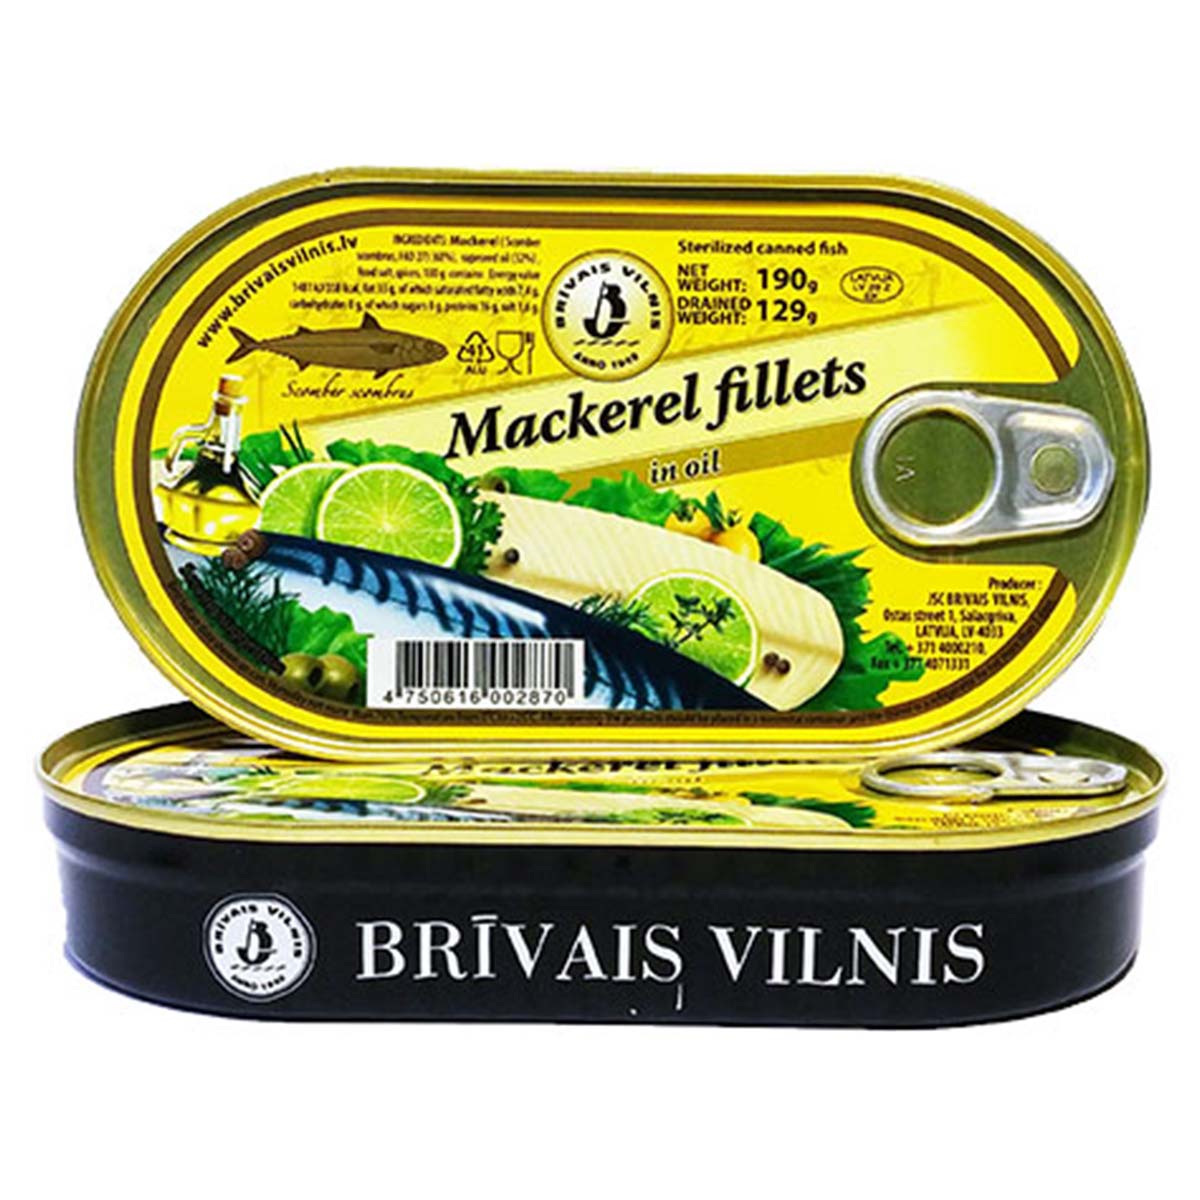 Brivais Vilnis - Mackerel Fillets in Oil - 190g - Continental Food Store